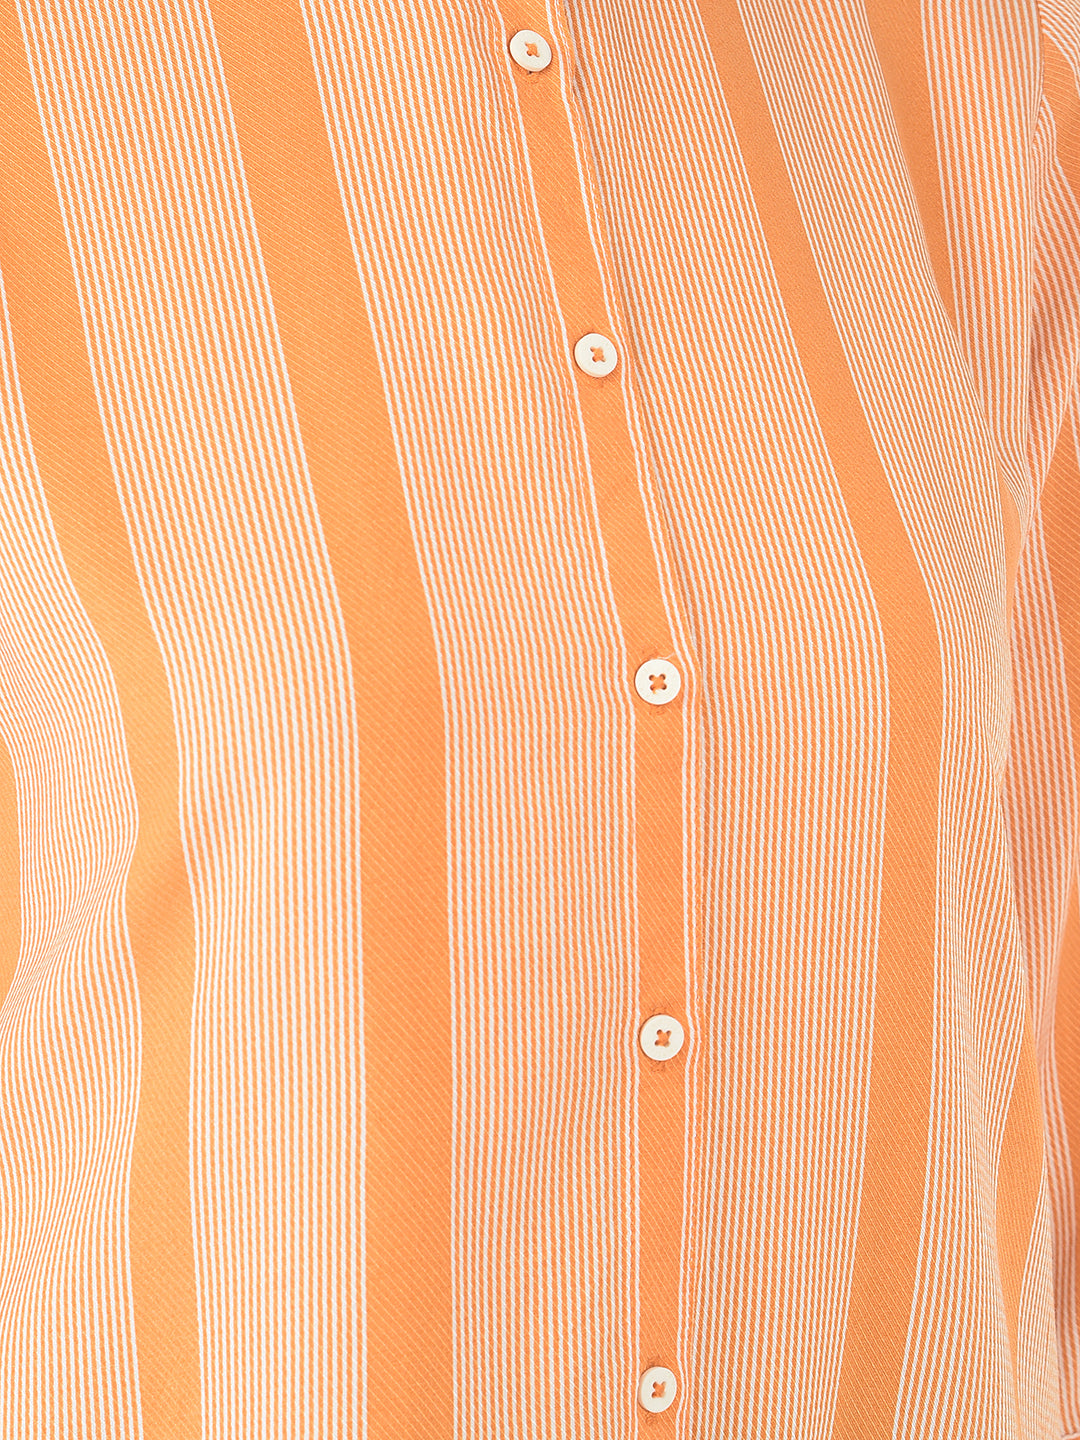 Orange Striped Longline Shirt - Women Shirts